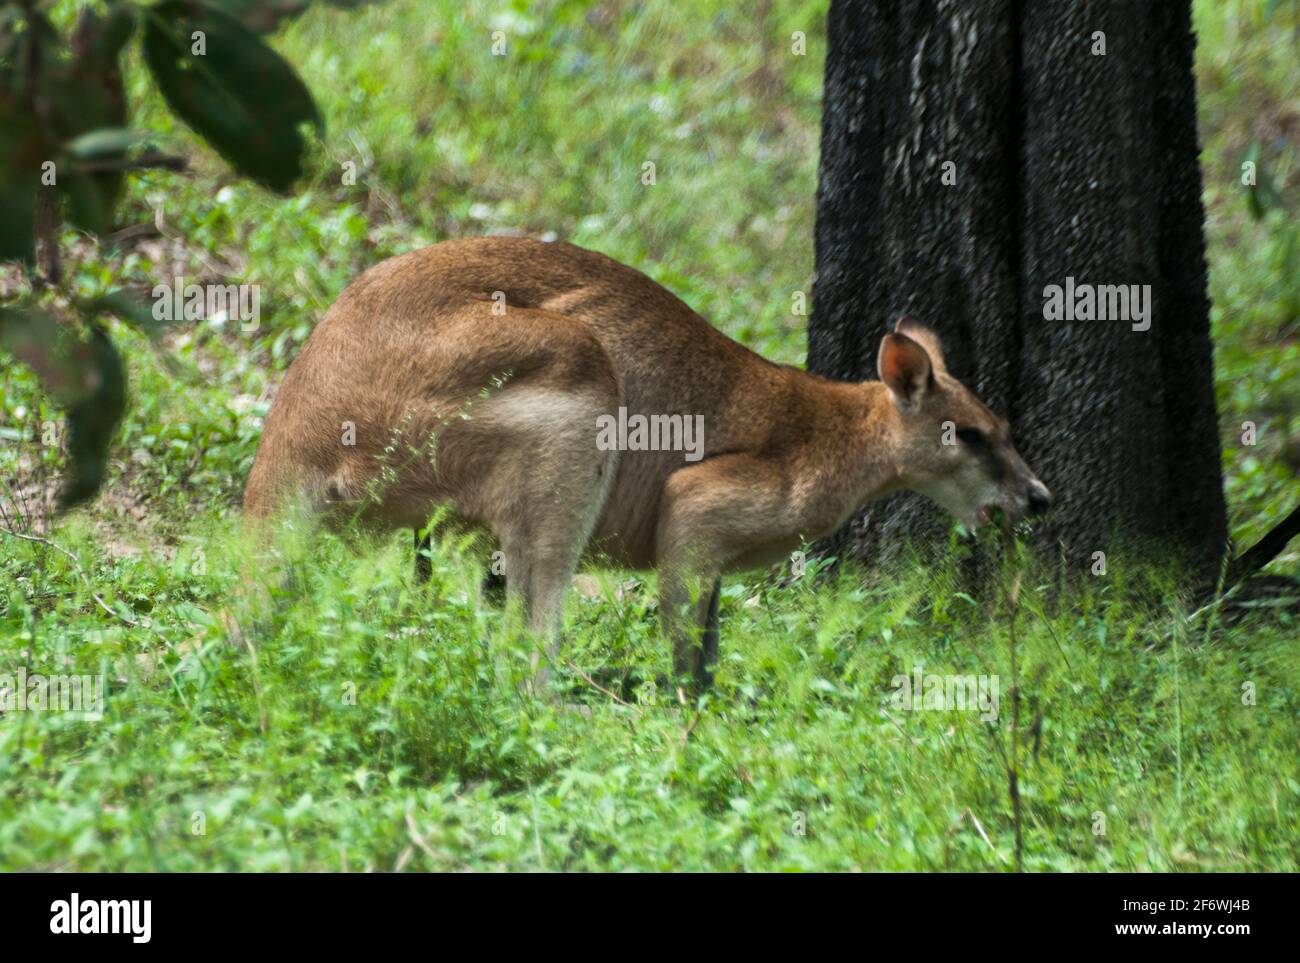 Antilopine wallaroo (red kangaroo) near Wangi Falls at Litchfield National Park, Northern Territory, Australia Stock Photo